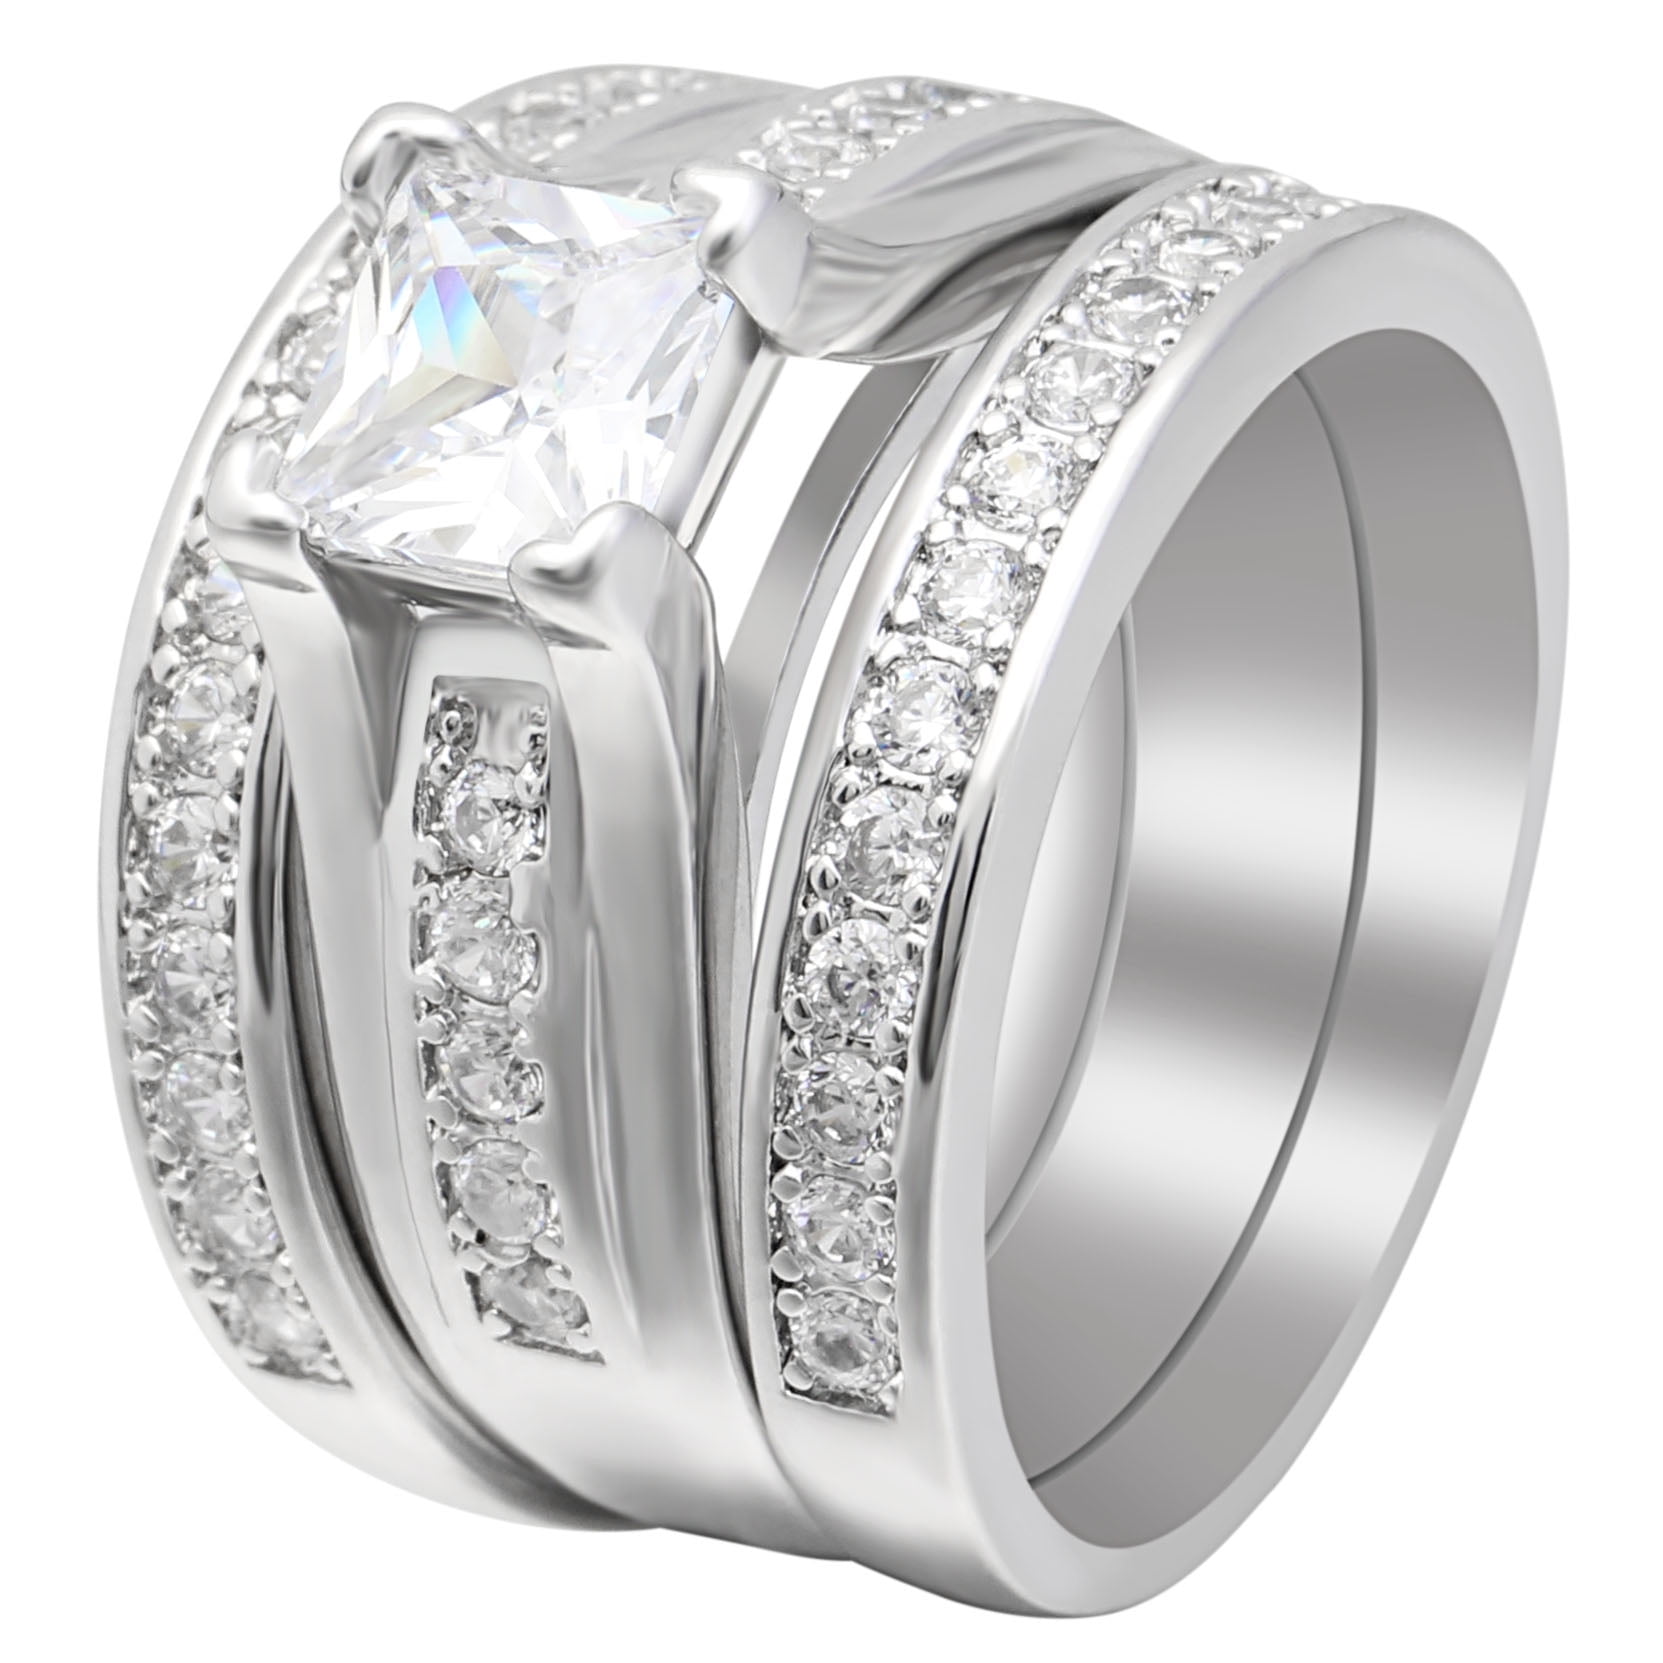 Adora 3Pc Halo Pave Wedding Engagement Ring Blk Band Set Ginger Lyne Collection